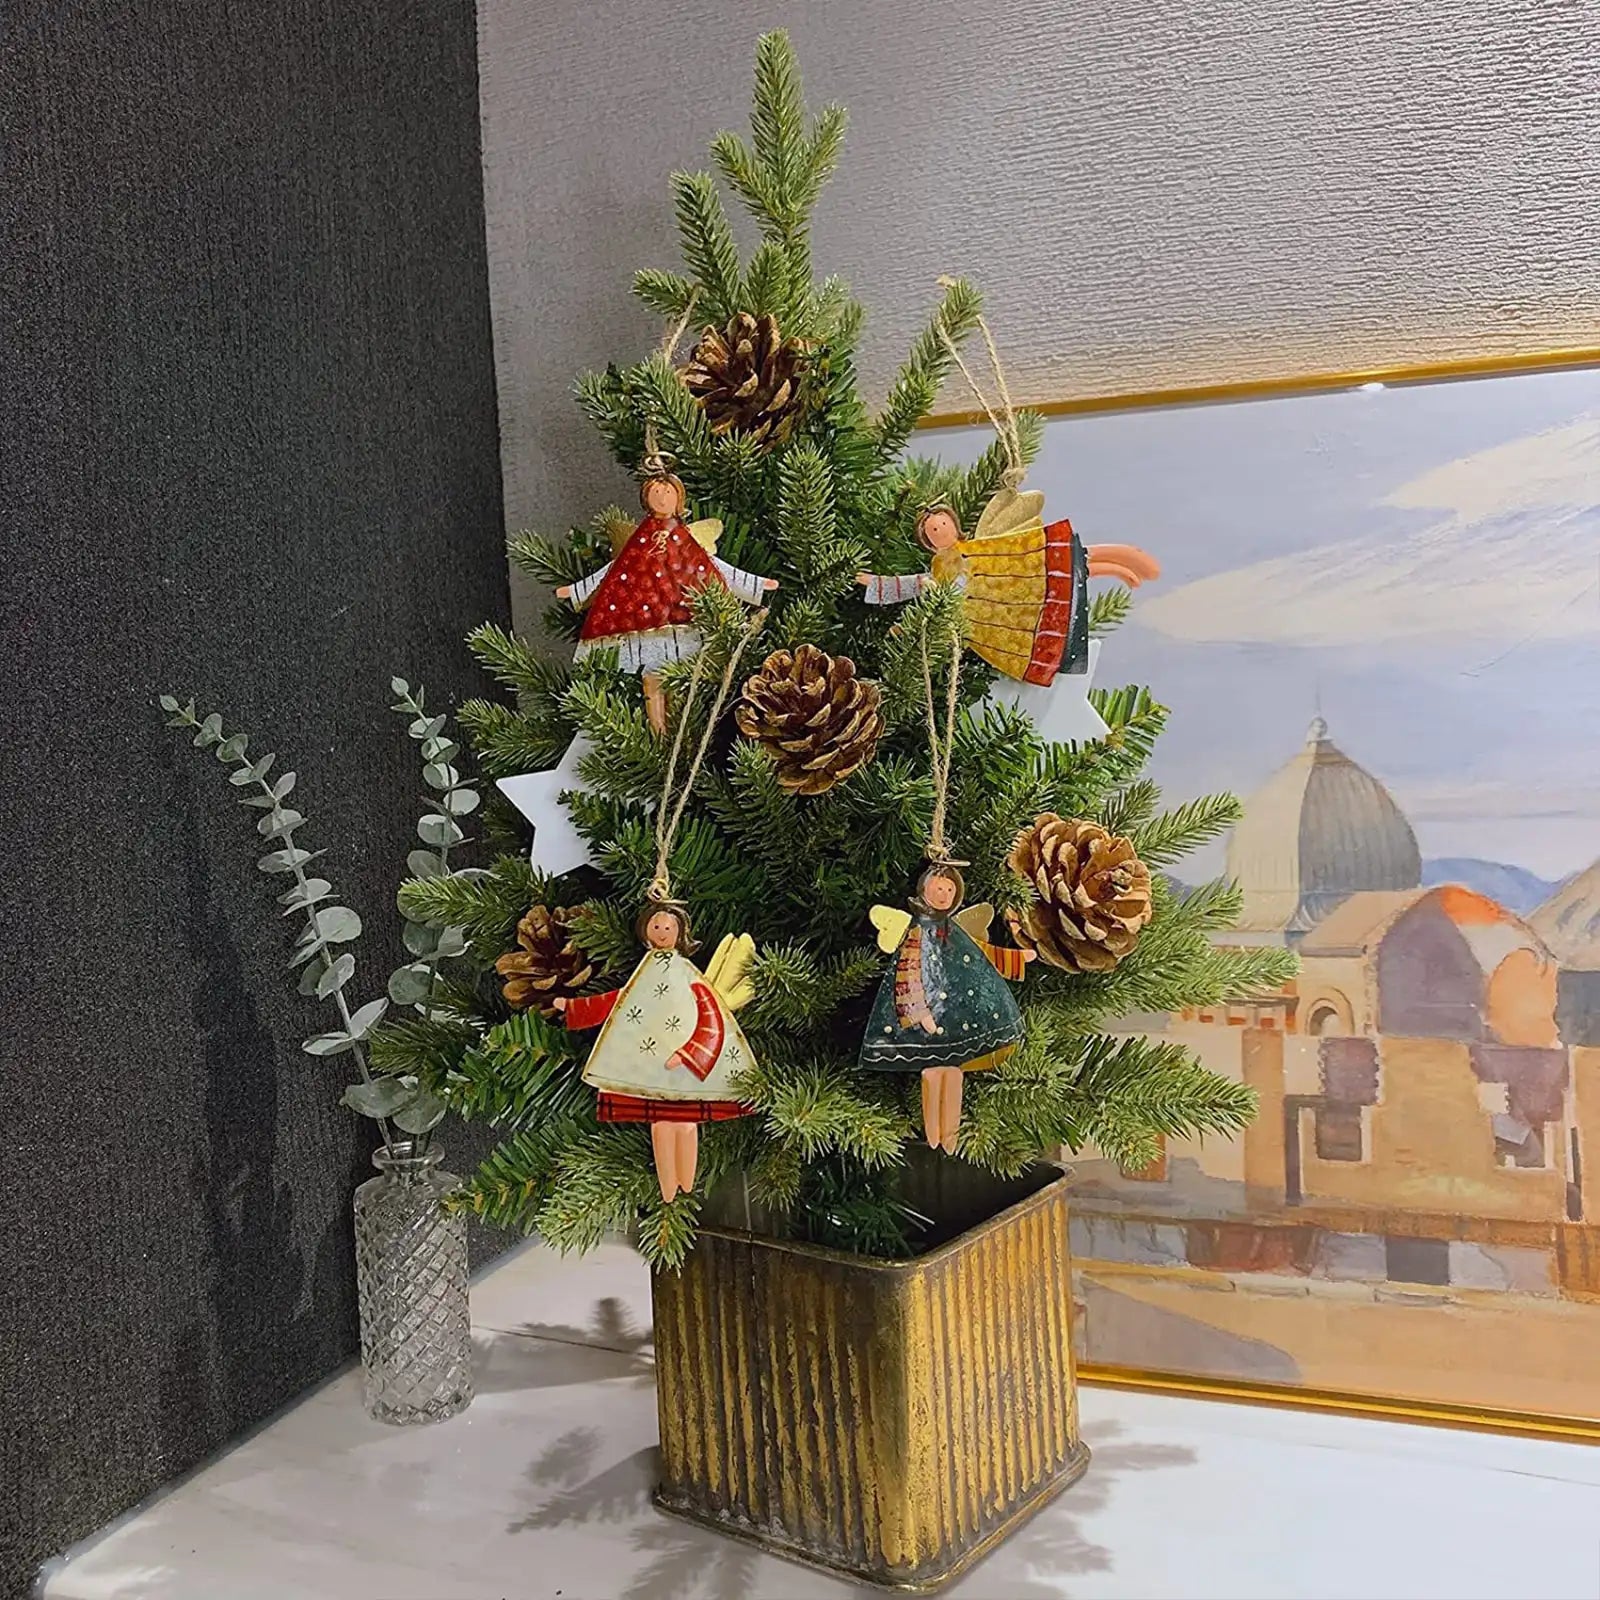 Christmas Ornaments Set for Xmas Tree, 12-Pack Metal Dancing Angels Decor